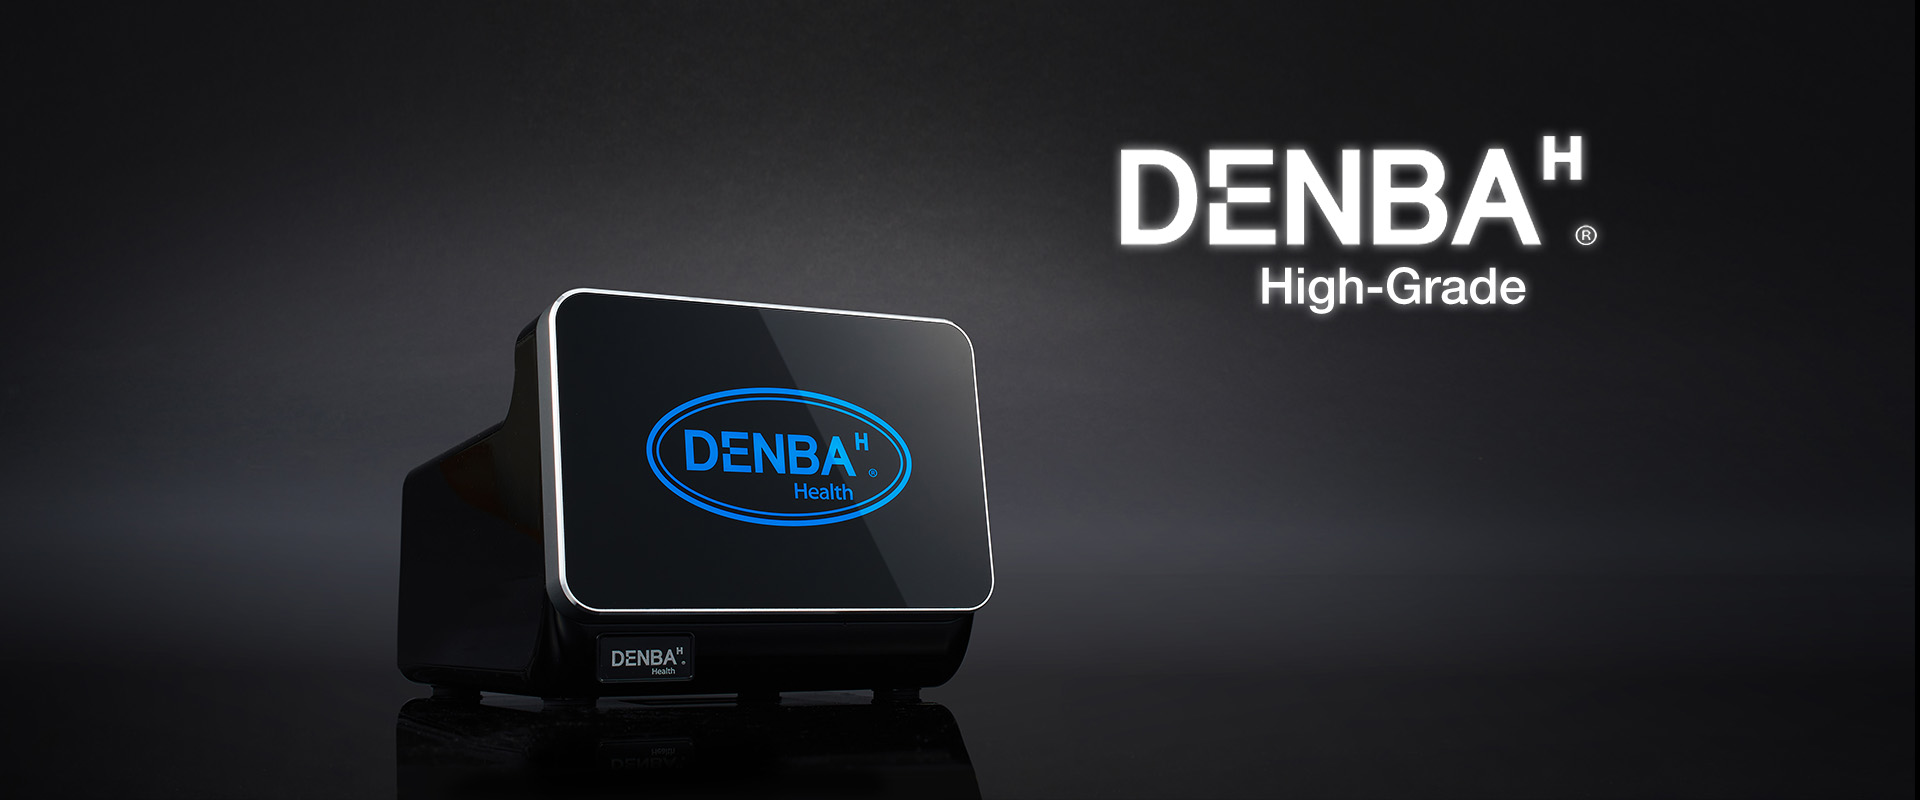 DENBA H High-grade-Products-DENBA+ | DENBA株式会社